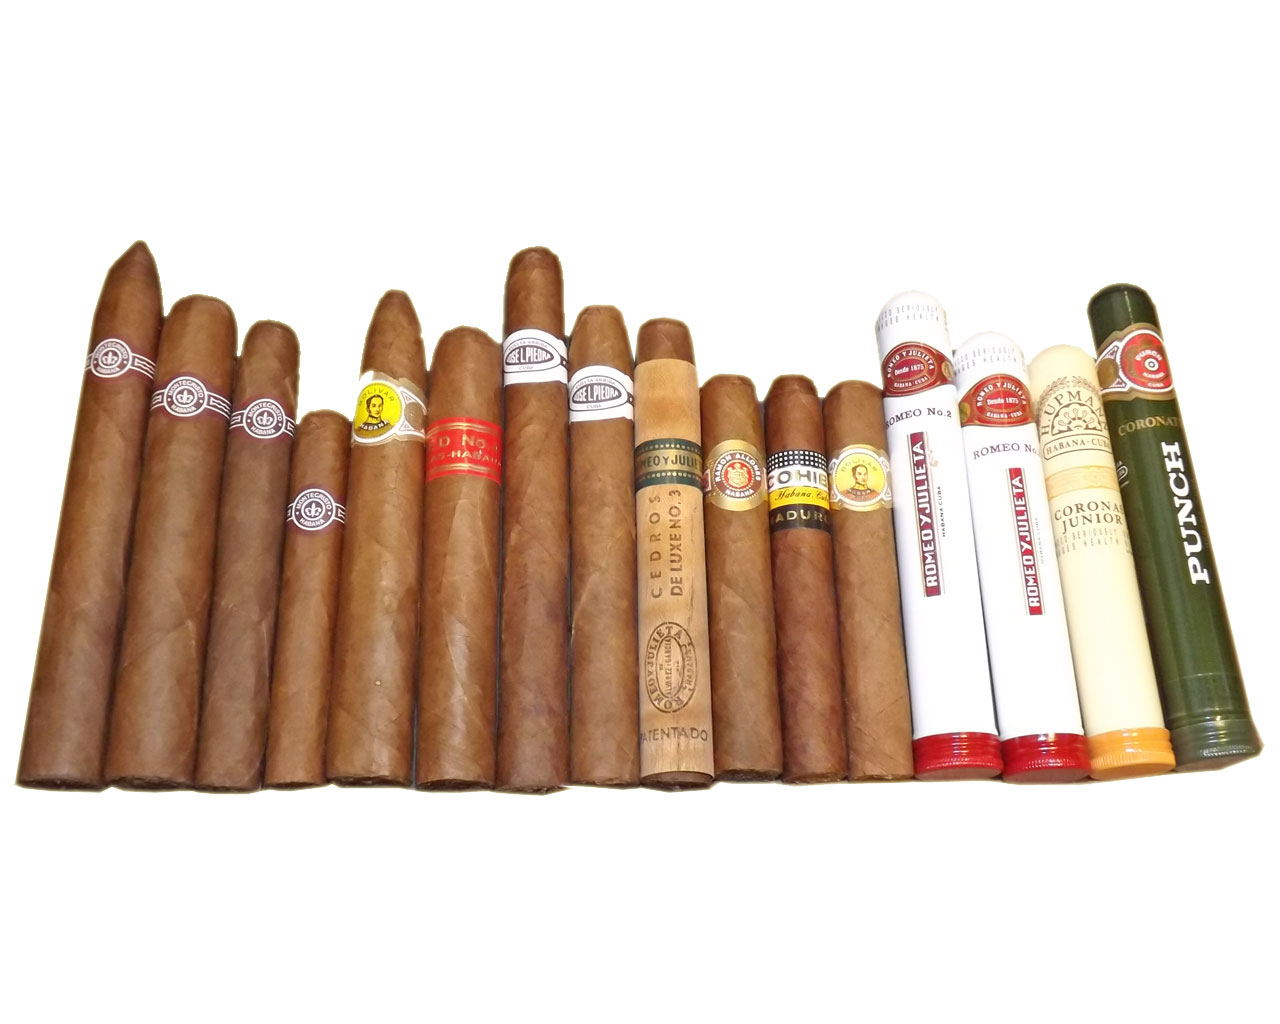 C.Gars Ltd 16th Anniversary Sampler - 16 Cigars